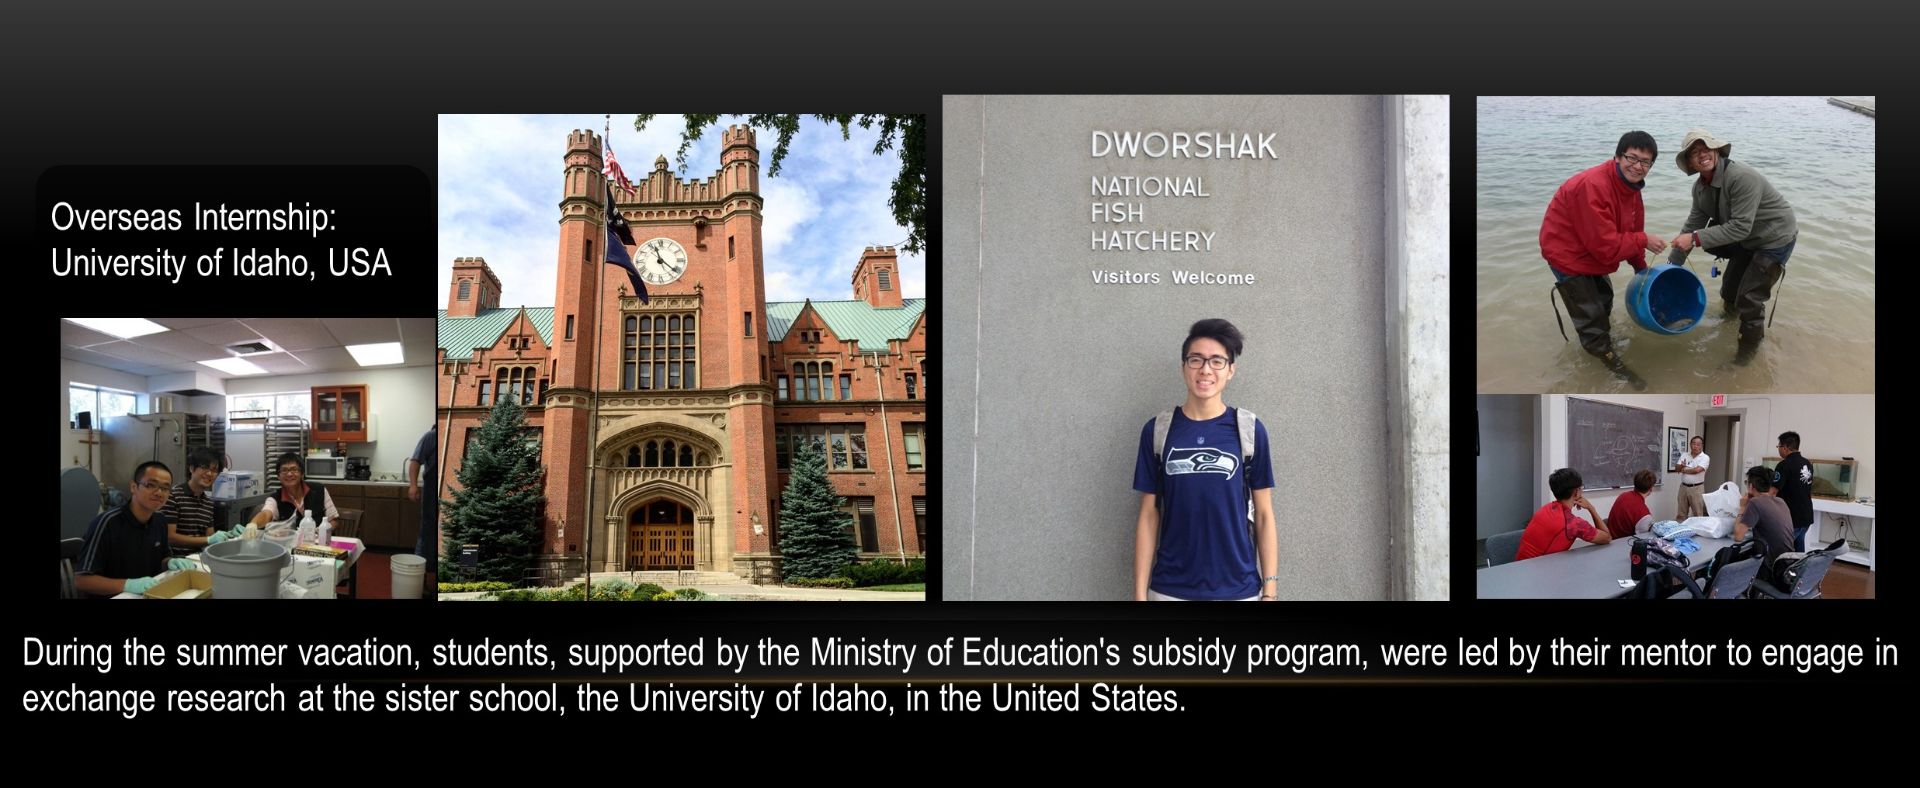 Overseas Internship: University of Idaho, USA